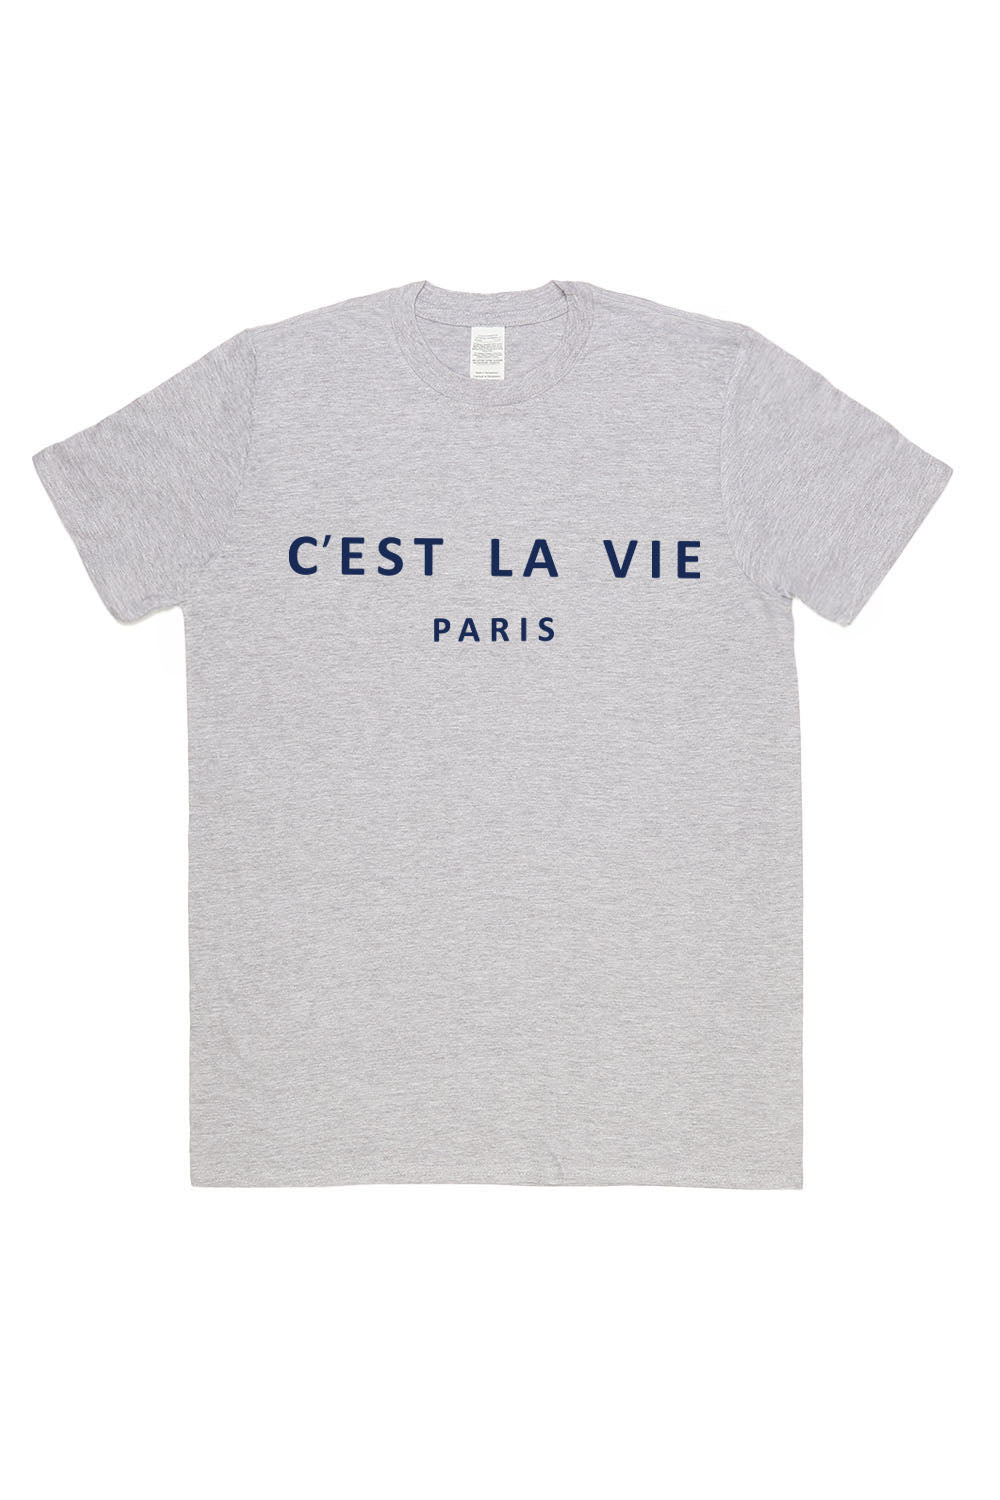 C'est La Vie Paris Slogan Printed T-Shirt in Grey 